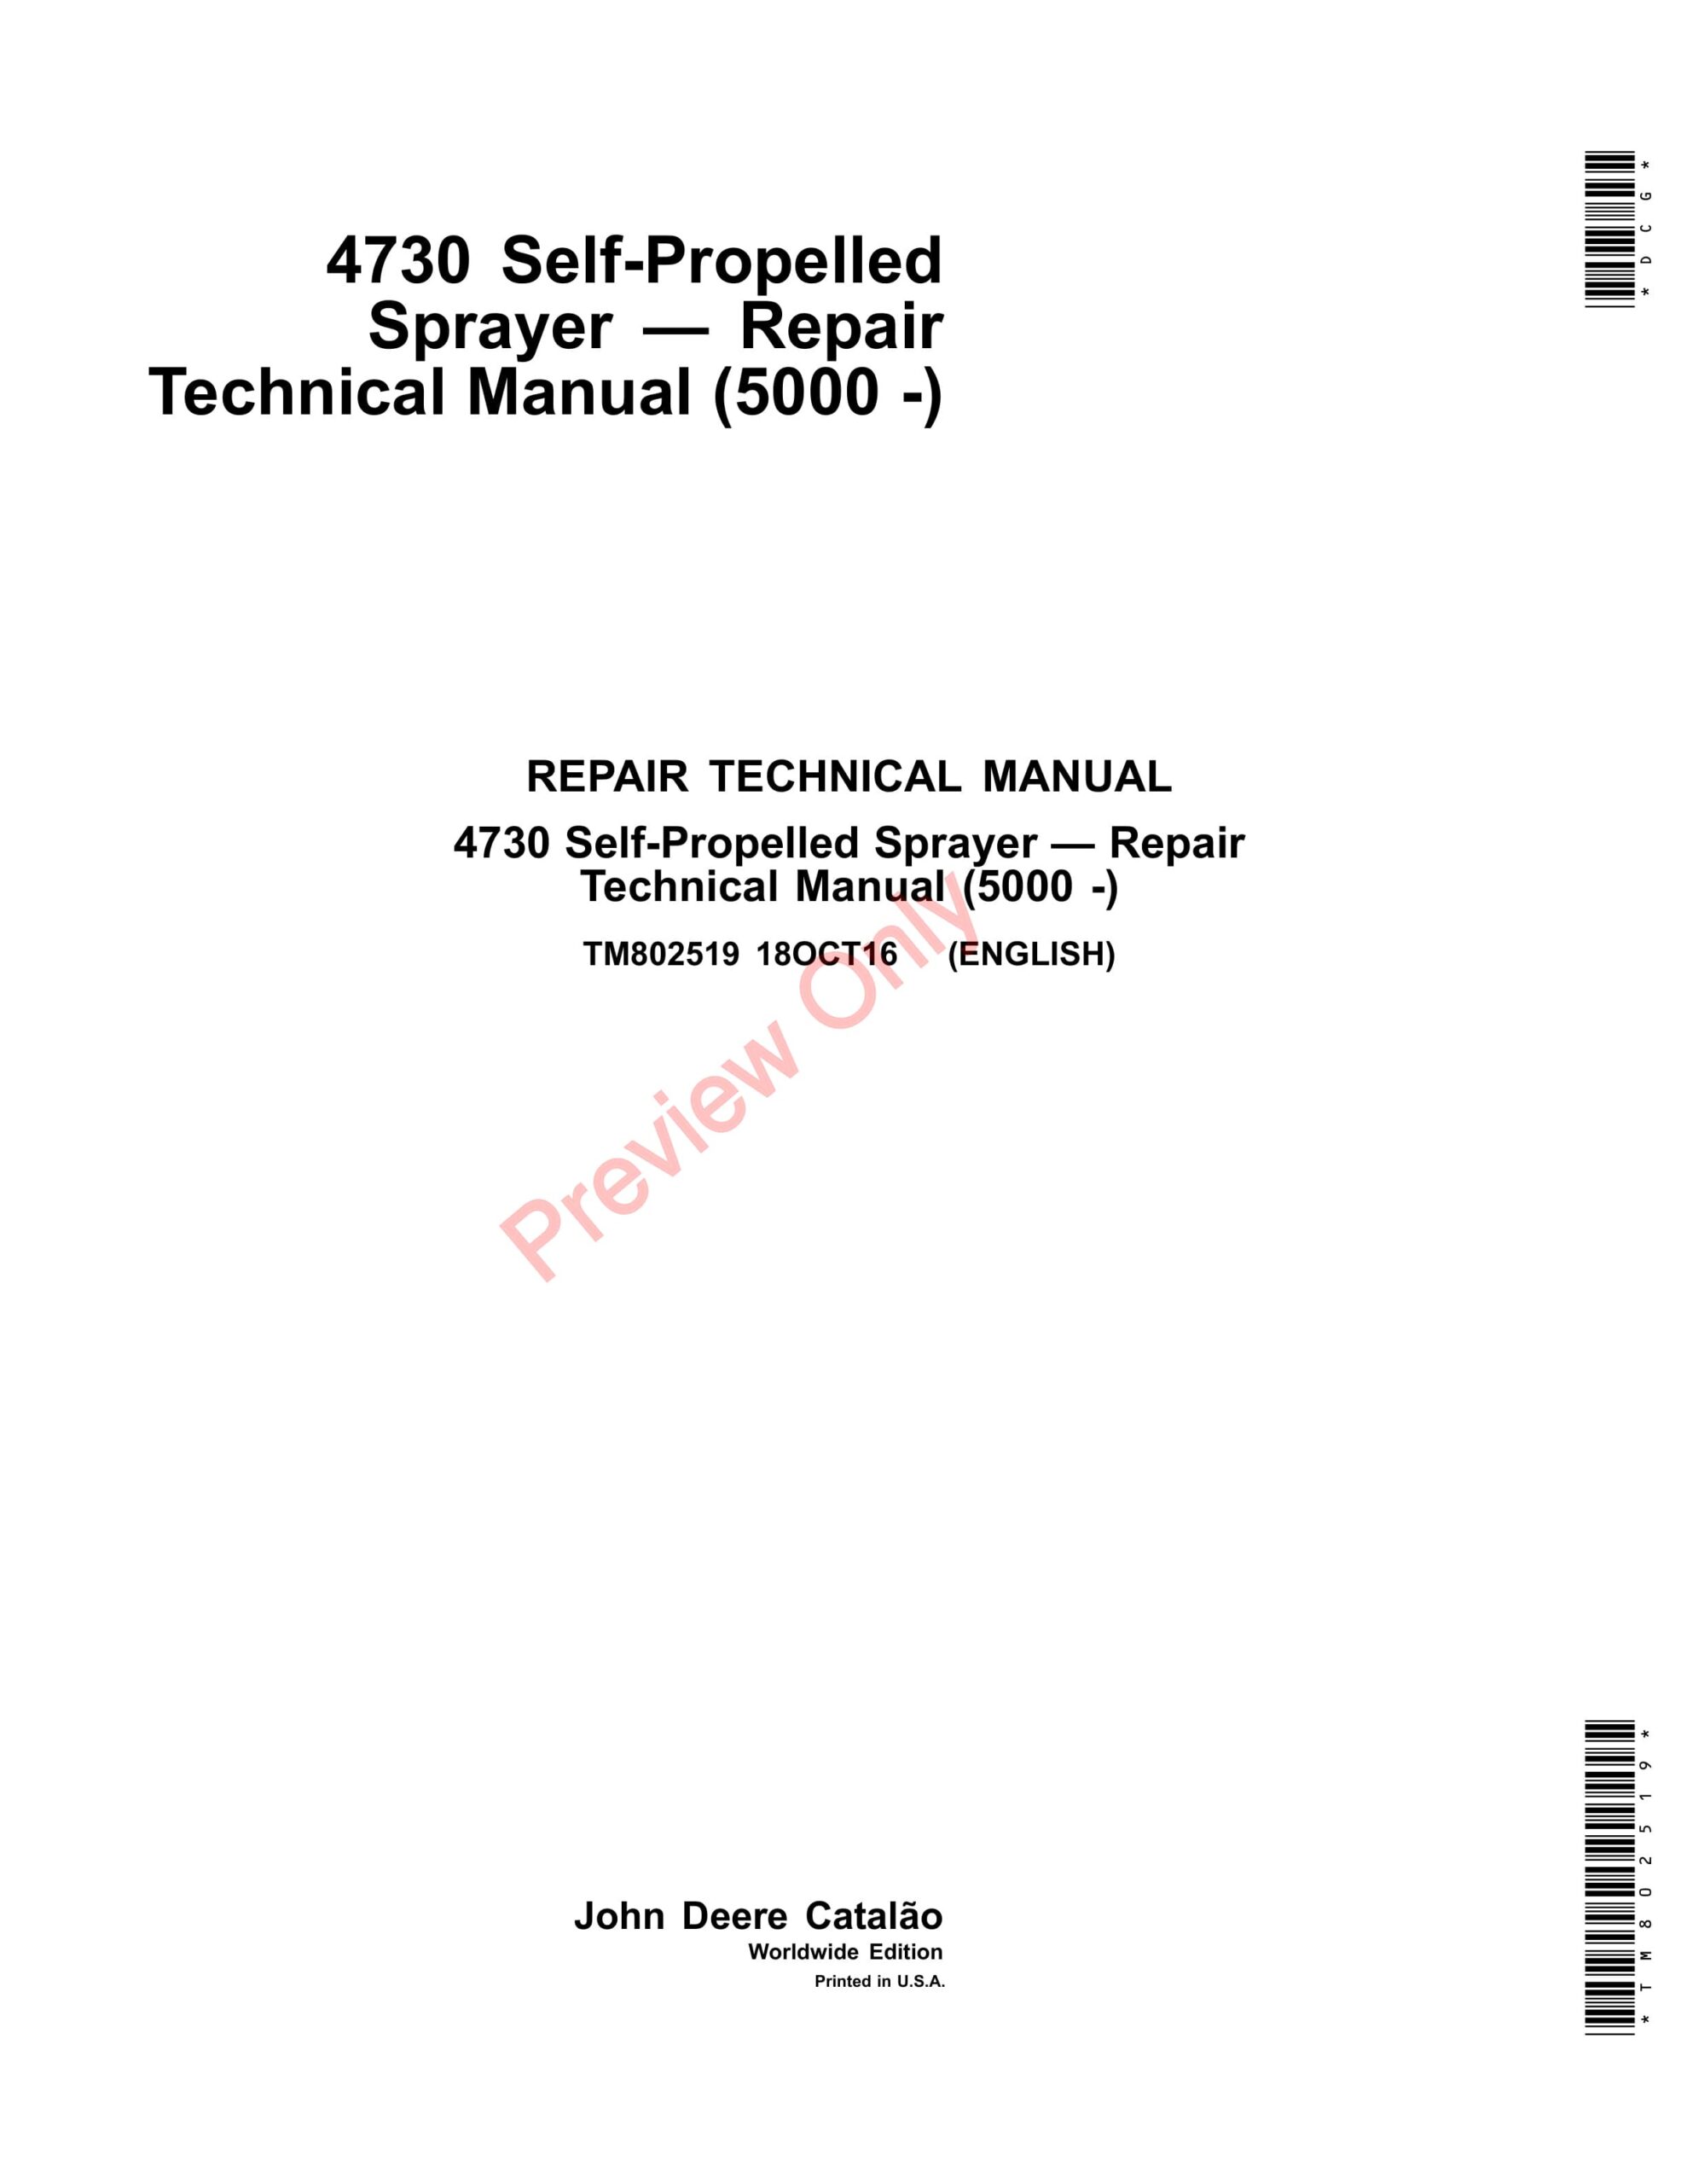 John Deere 4730 Self-Propelled Sprayer Technical Manual TM802519 18OCT16-1